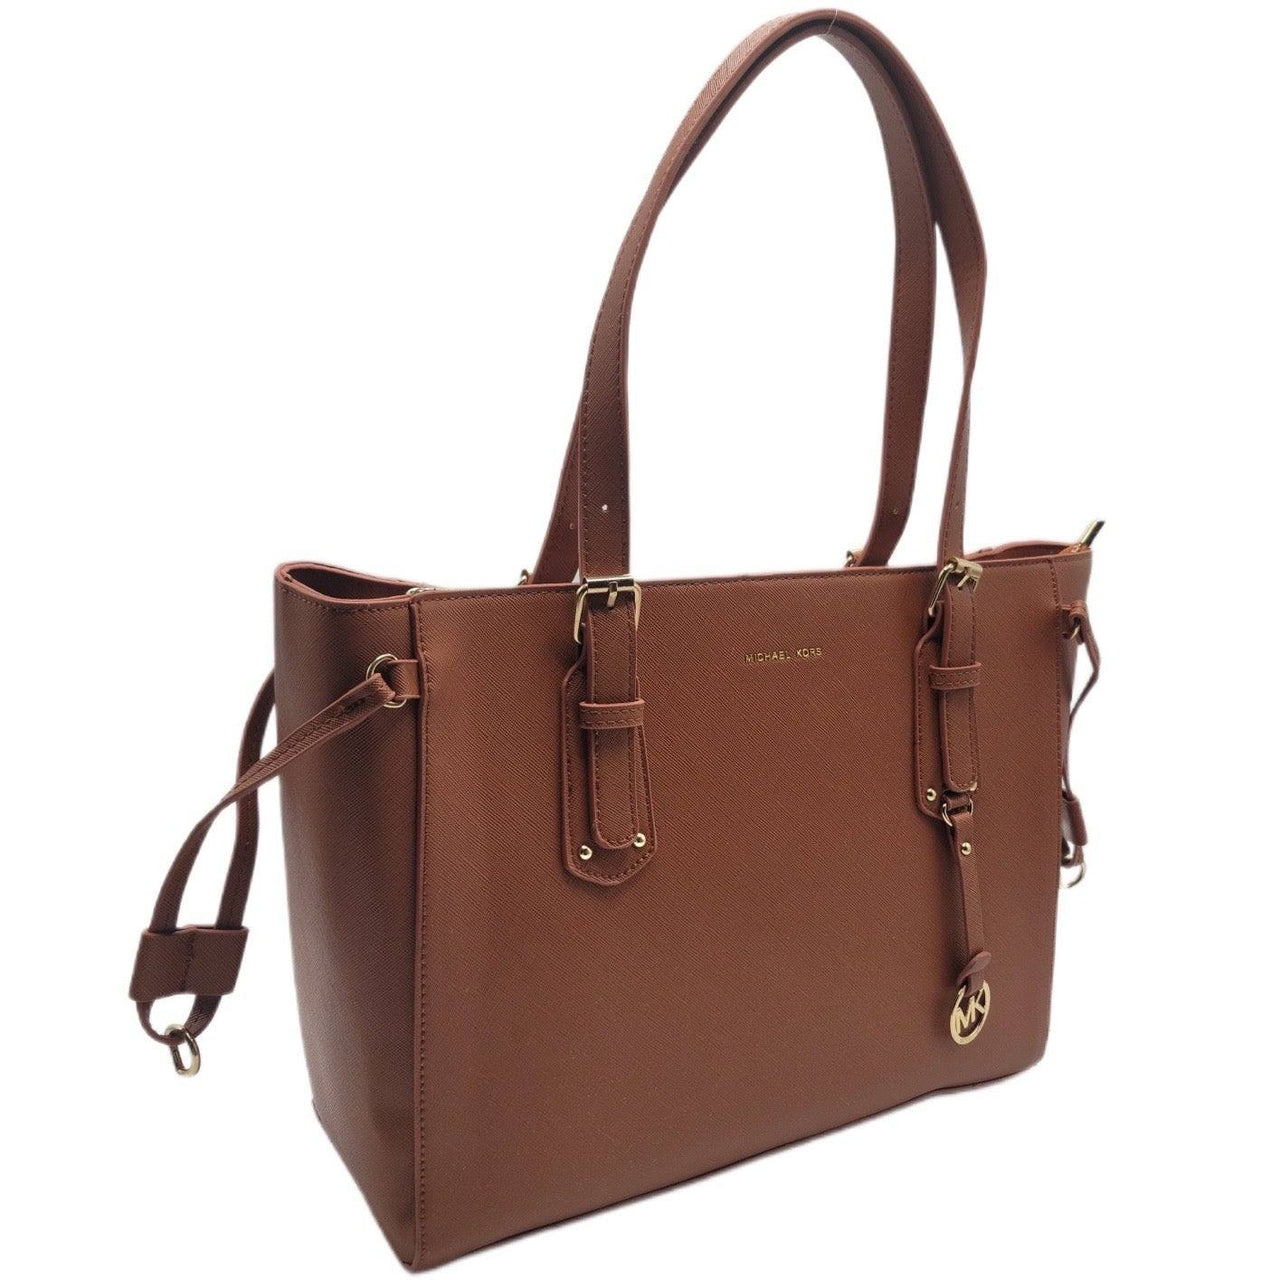 The Bag Couture Handbags, Wallets & Cases MK Shoulder Bag Large Classic Brown